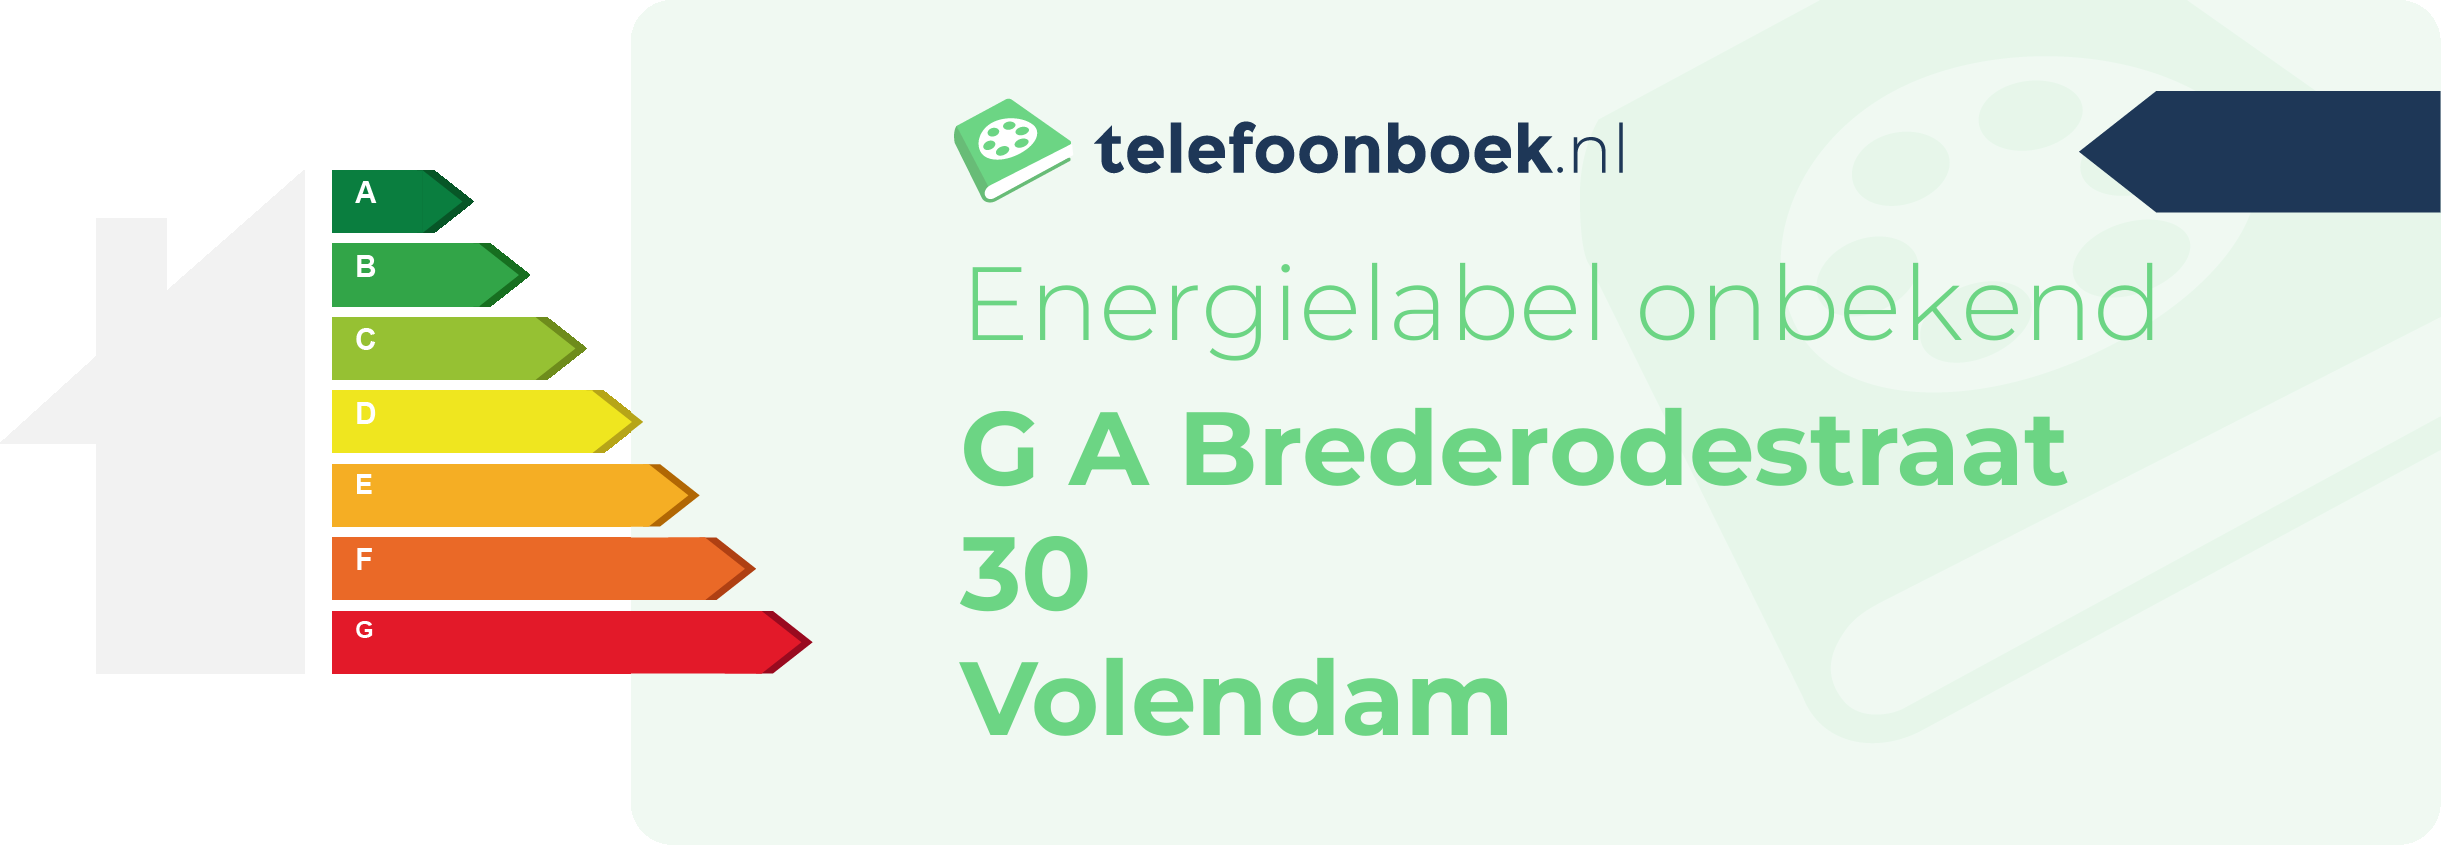 Energielabel G A Brederodestraat 30 Volendam